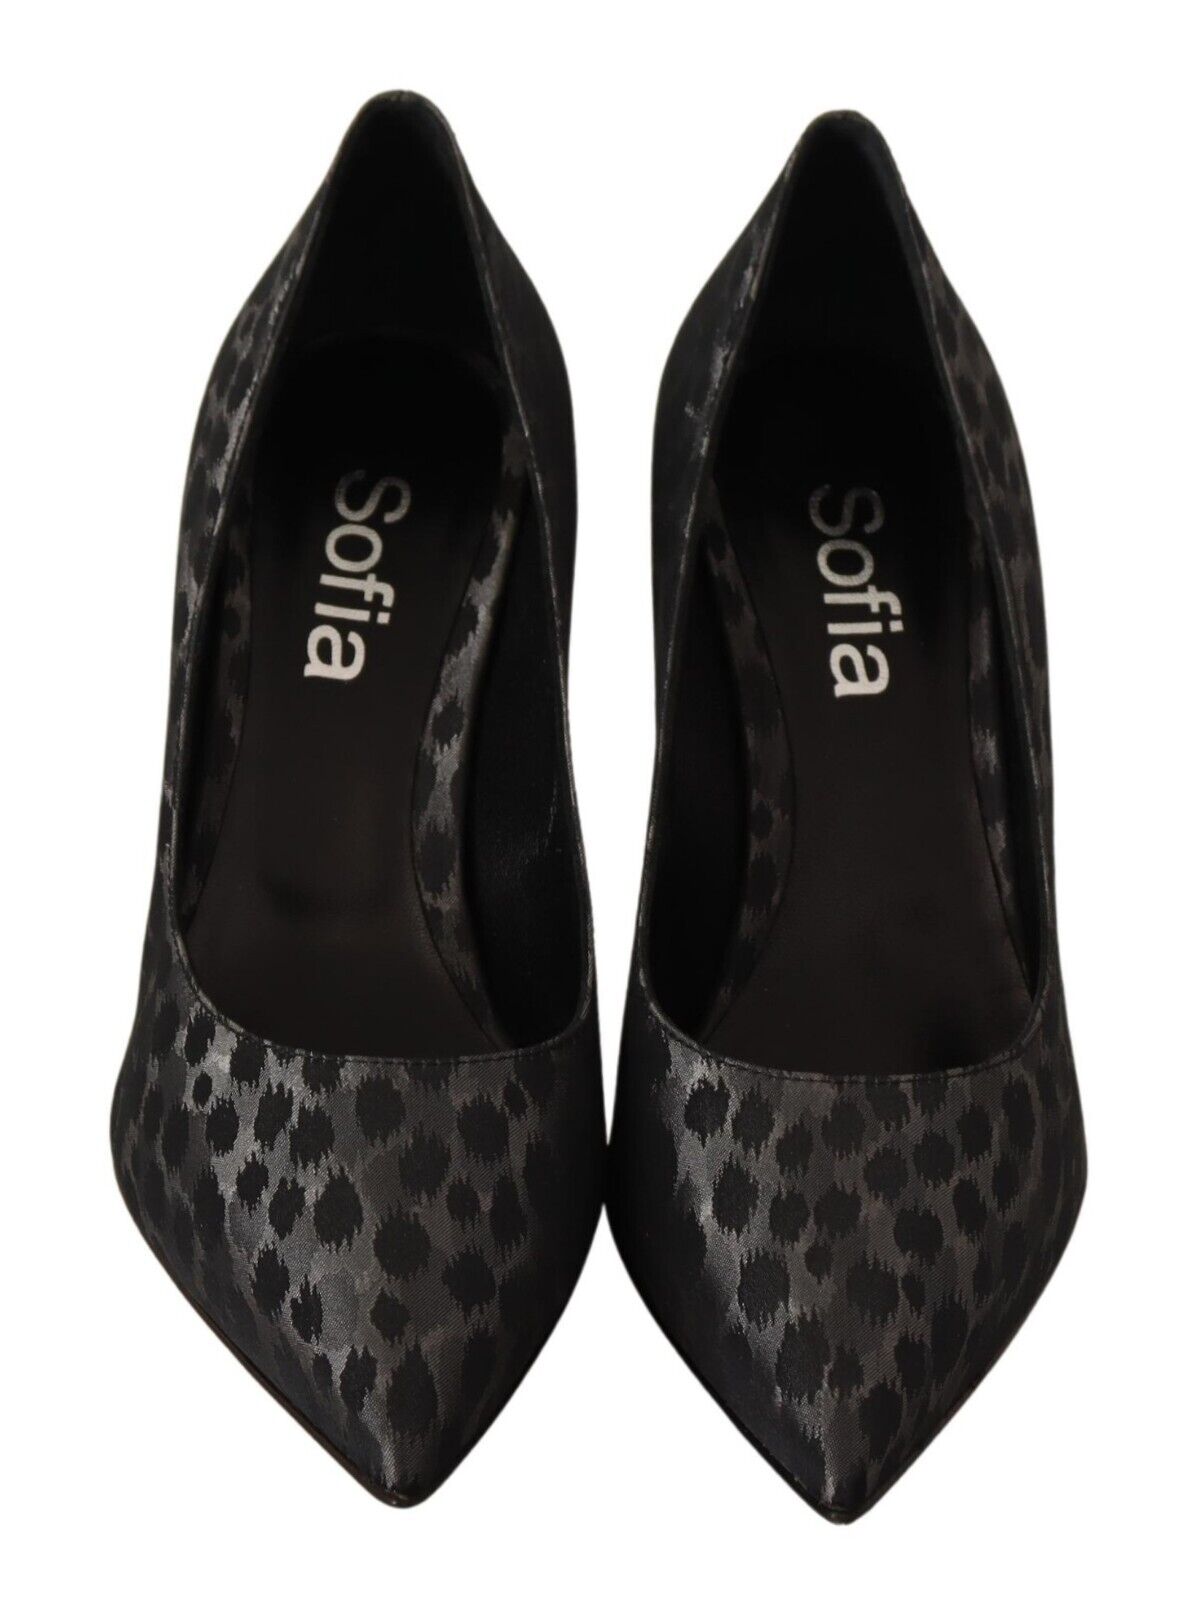 Sofia Black Leopard Leather Stiletto High Heels Pumps Shoes - Fizigo